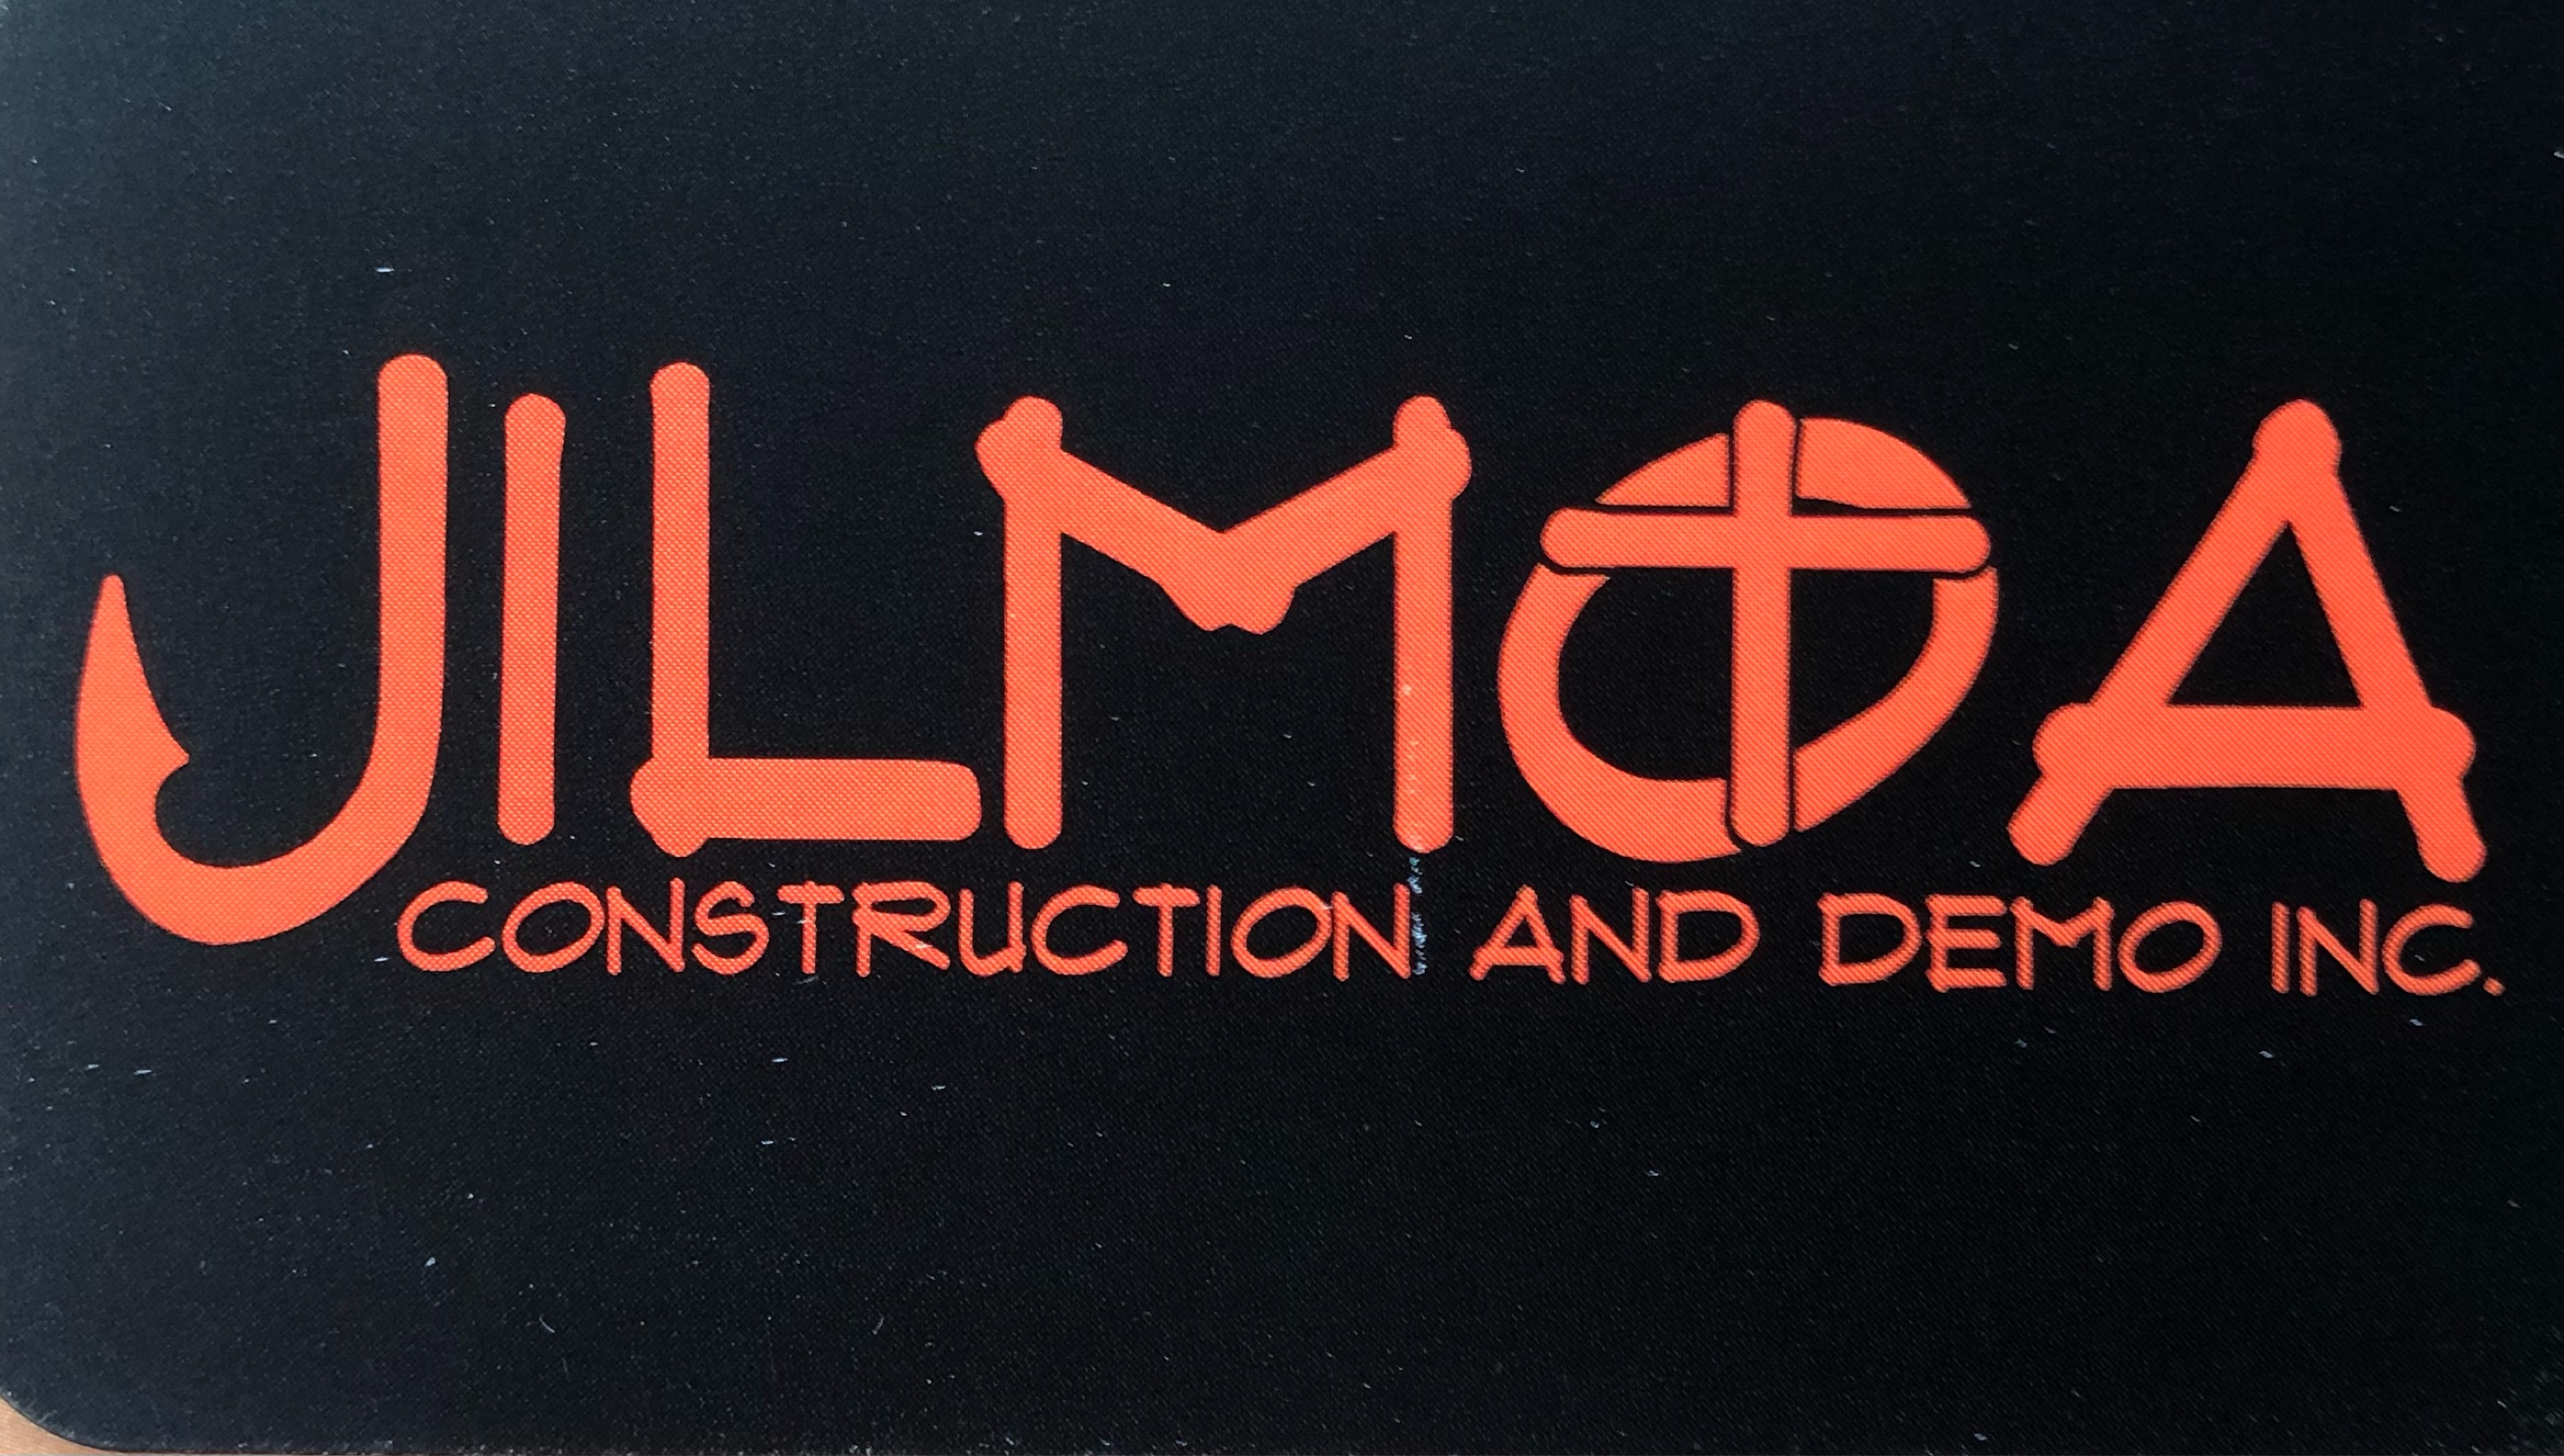 Jilmoa Construction & Demolition Logo